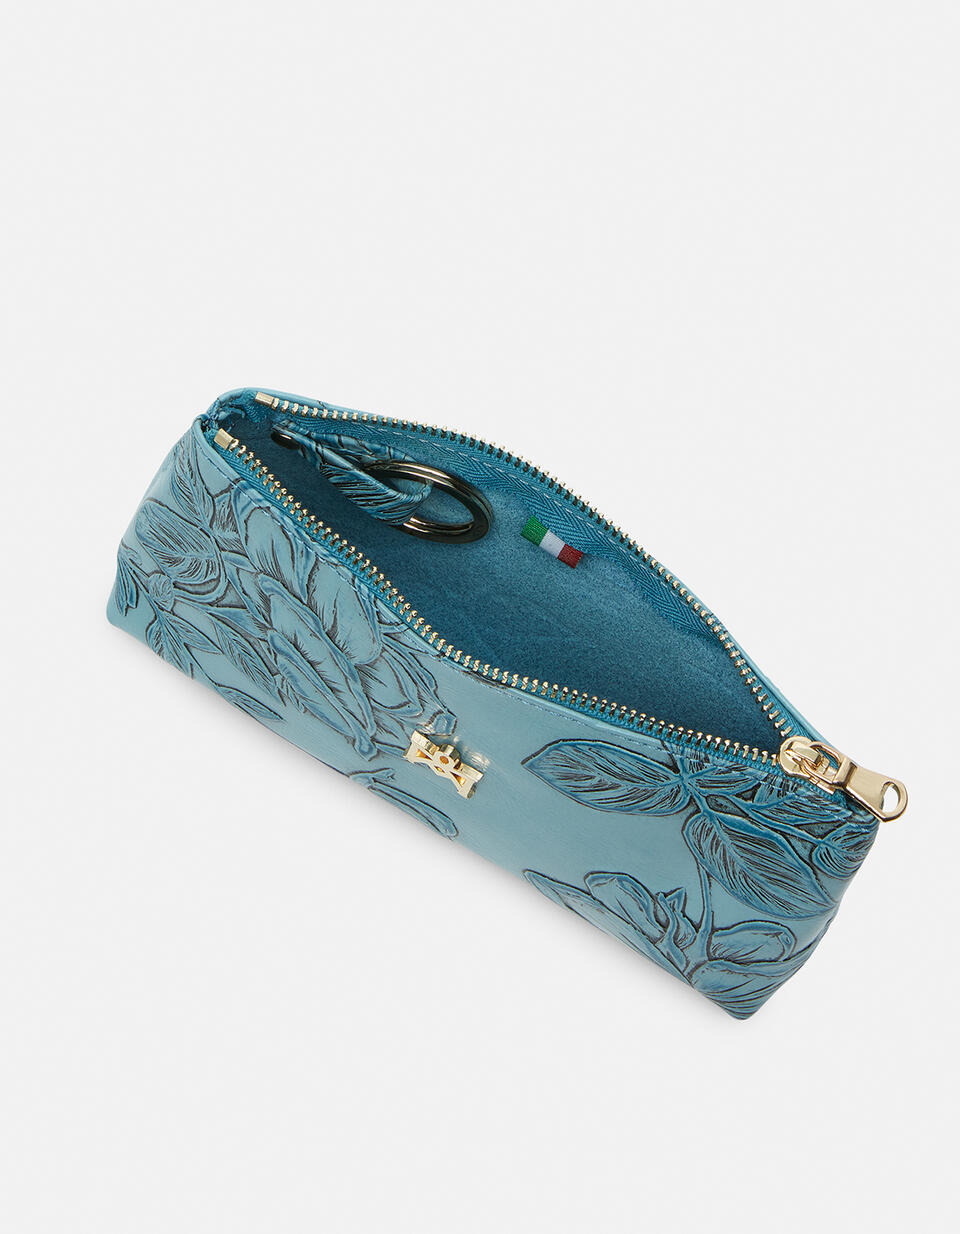 Key pouch Light blue  - Key Holders - Women's Accessories - Accessories - Cuoieria Fiorentina